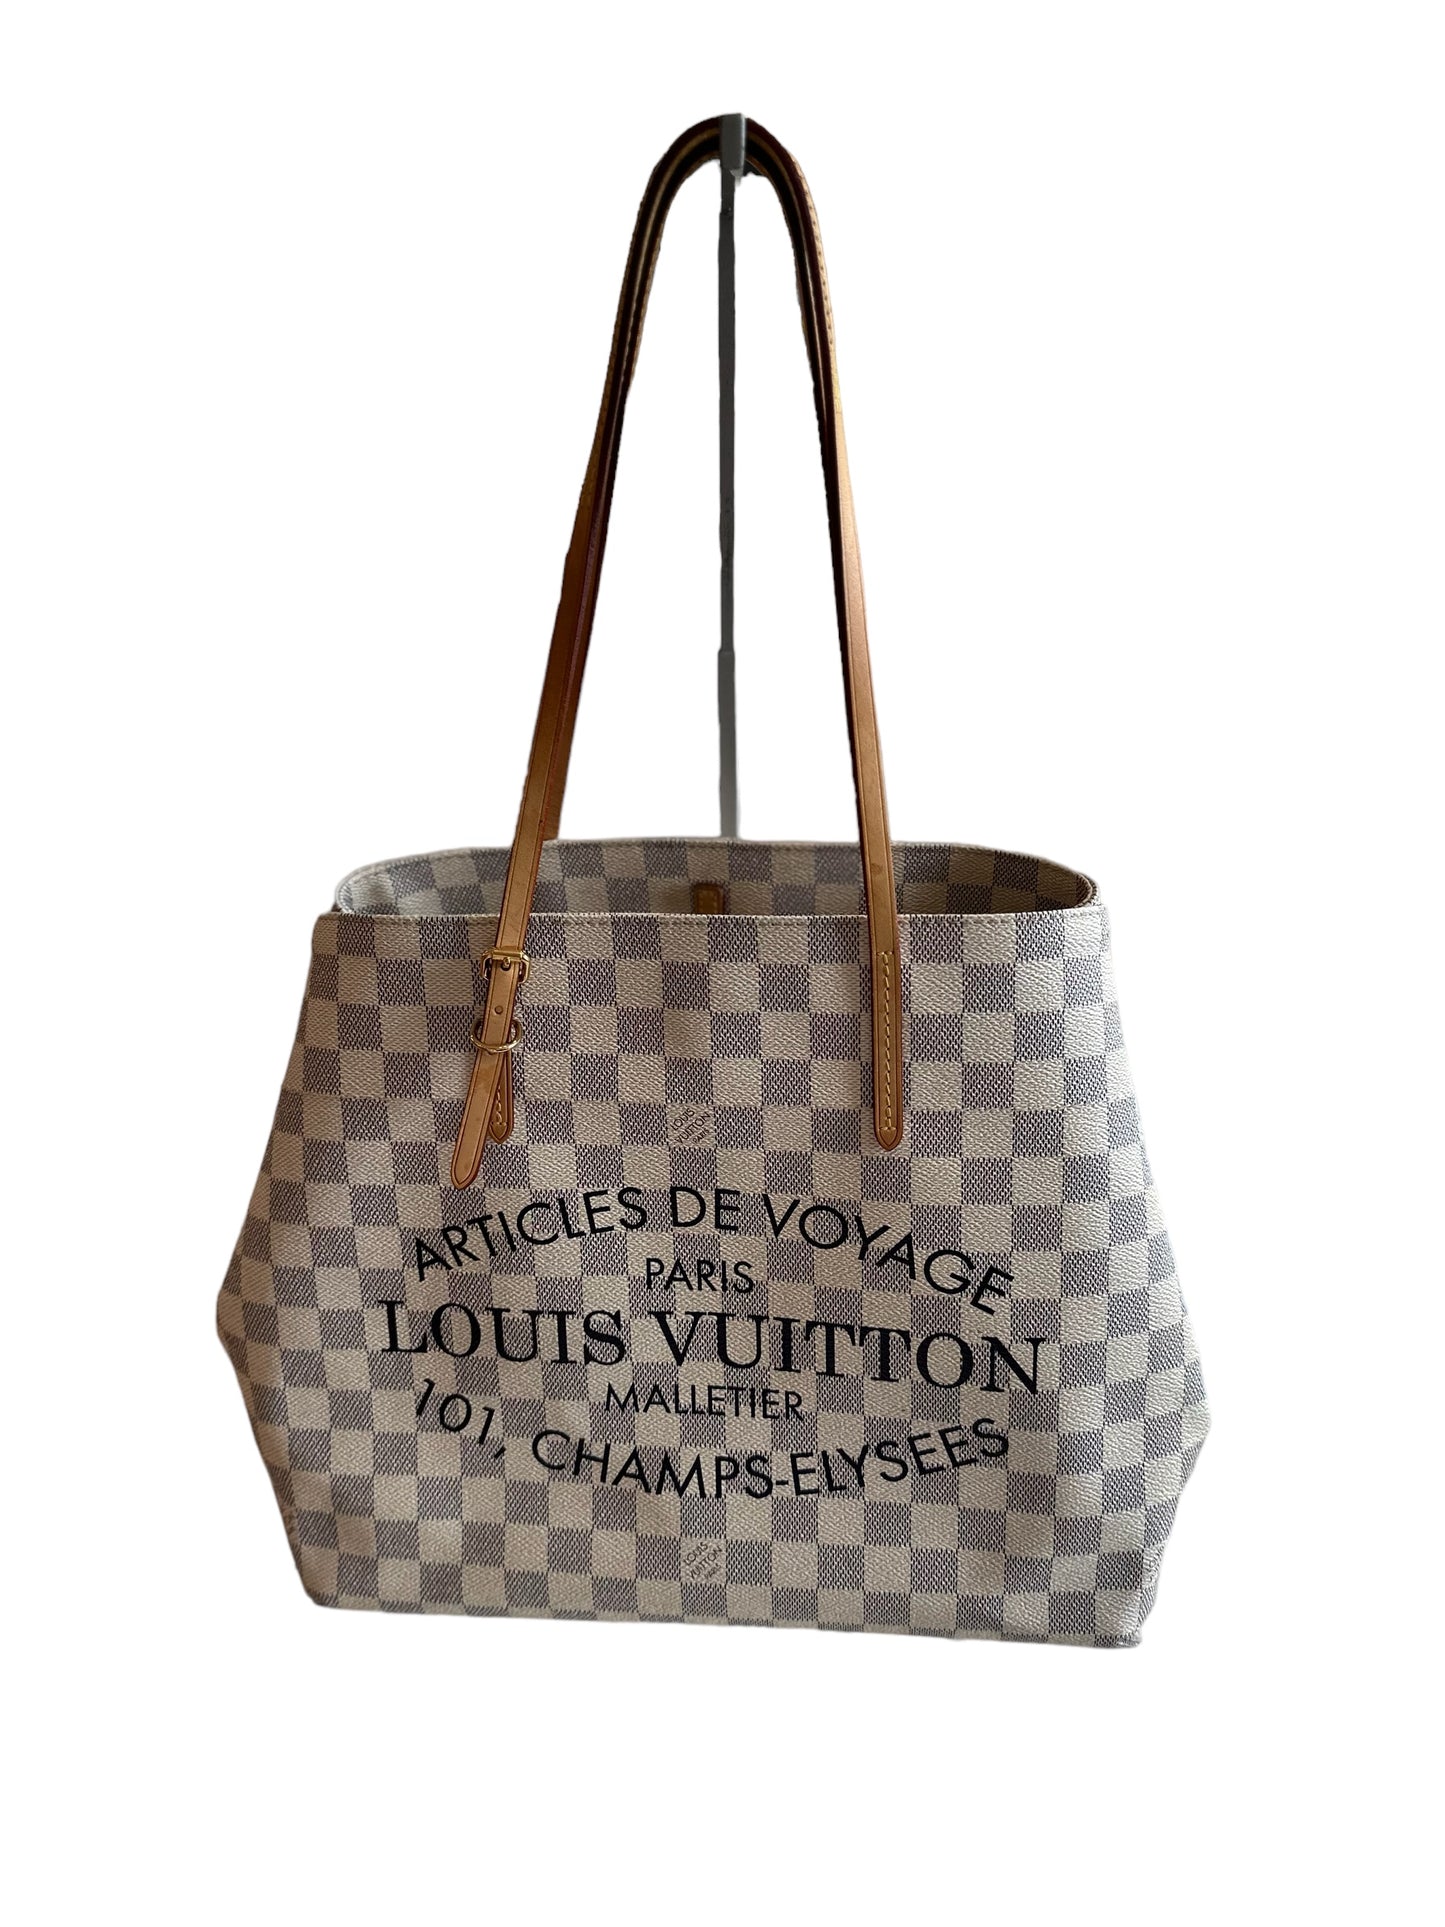 Louis Vuitton damier adventure convertible tote